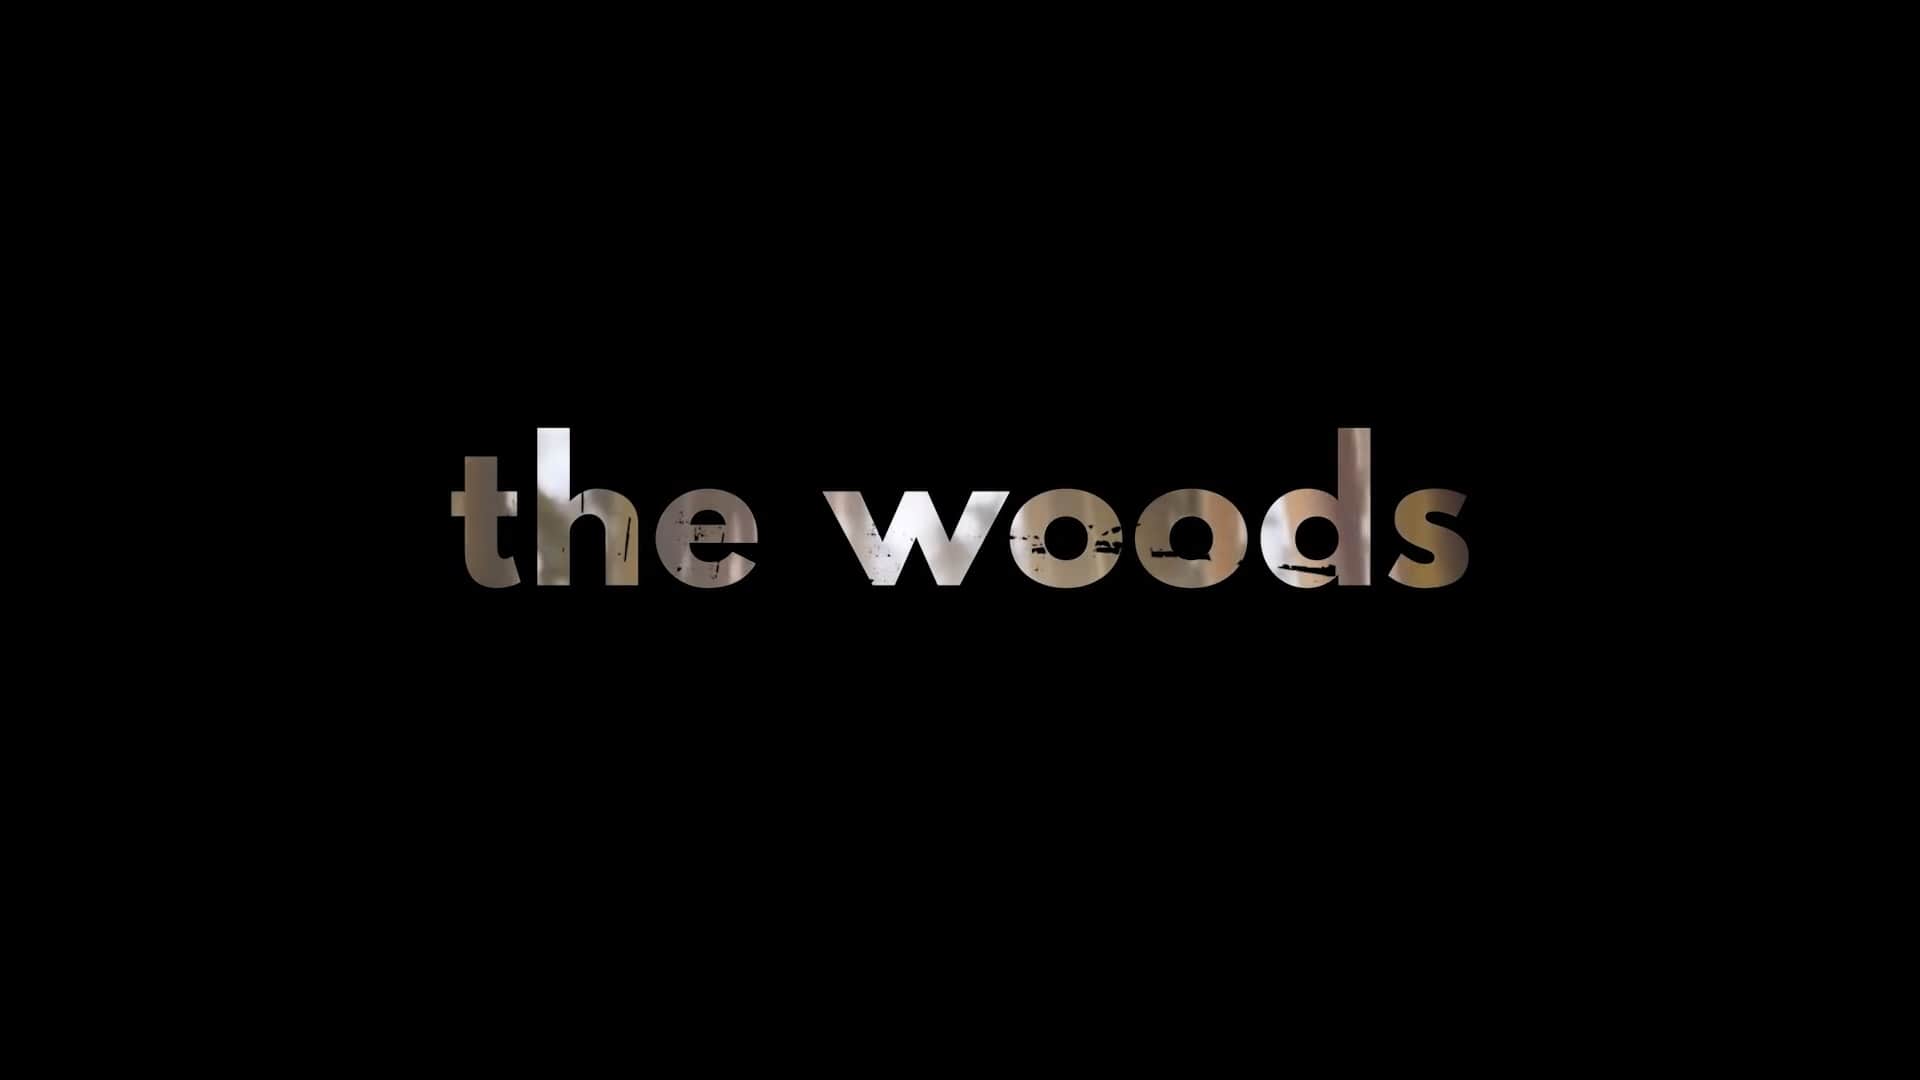 Netflix The Woods Trailer, Netflix Dramas, Netflix Mystery Shows, Coming to Netflix in June 2020, Harlan Coben The Woods Amazon Books